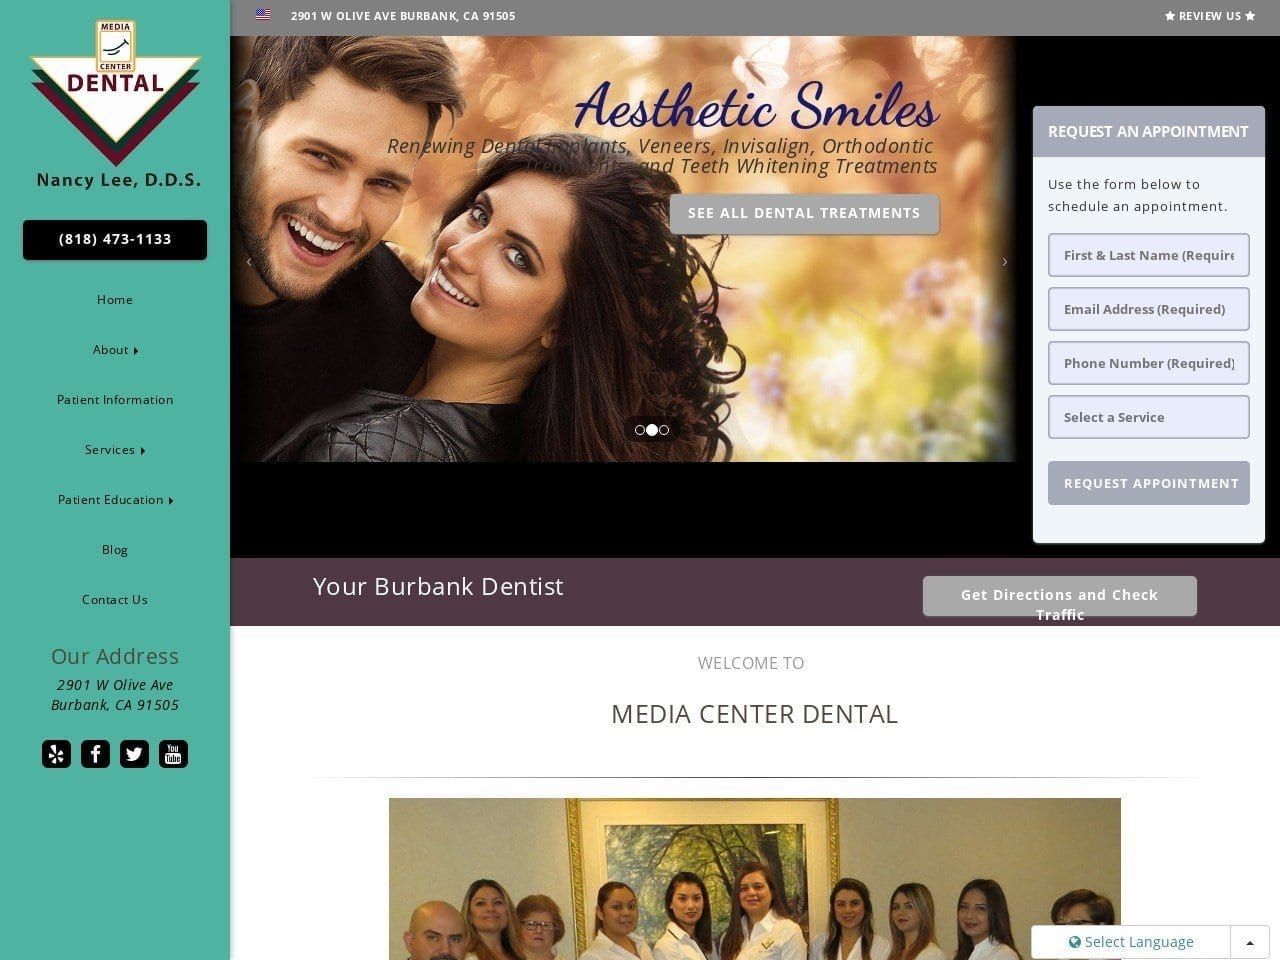 Media Center Dental Website Screenshot from mediacenterdental.com